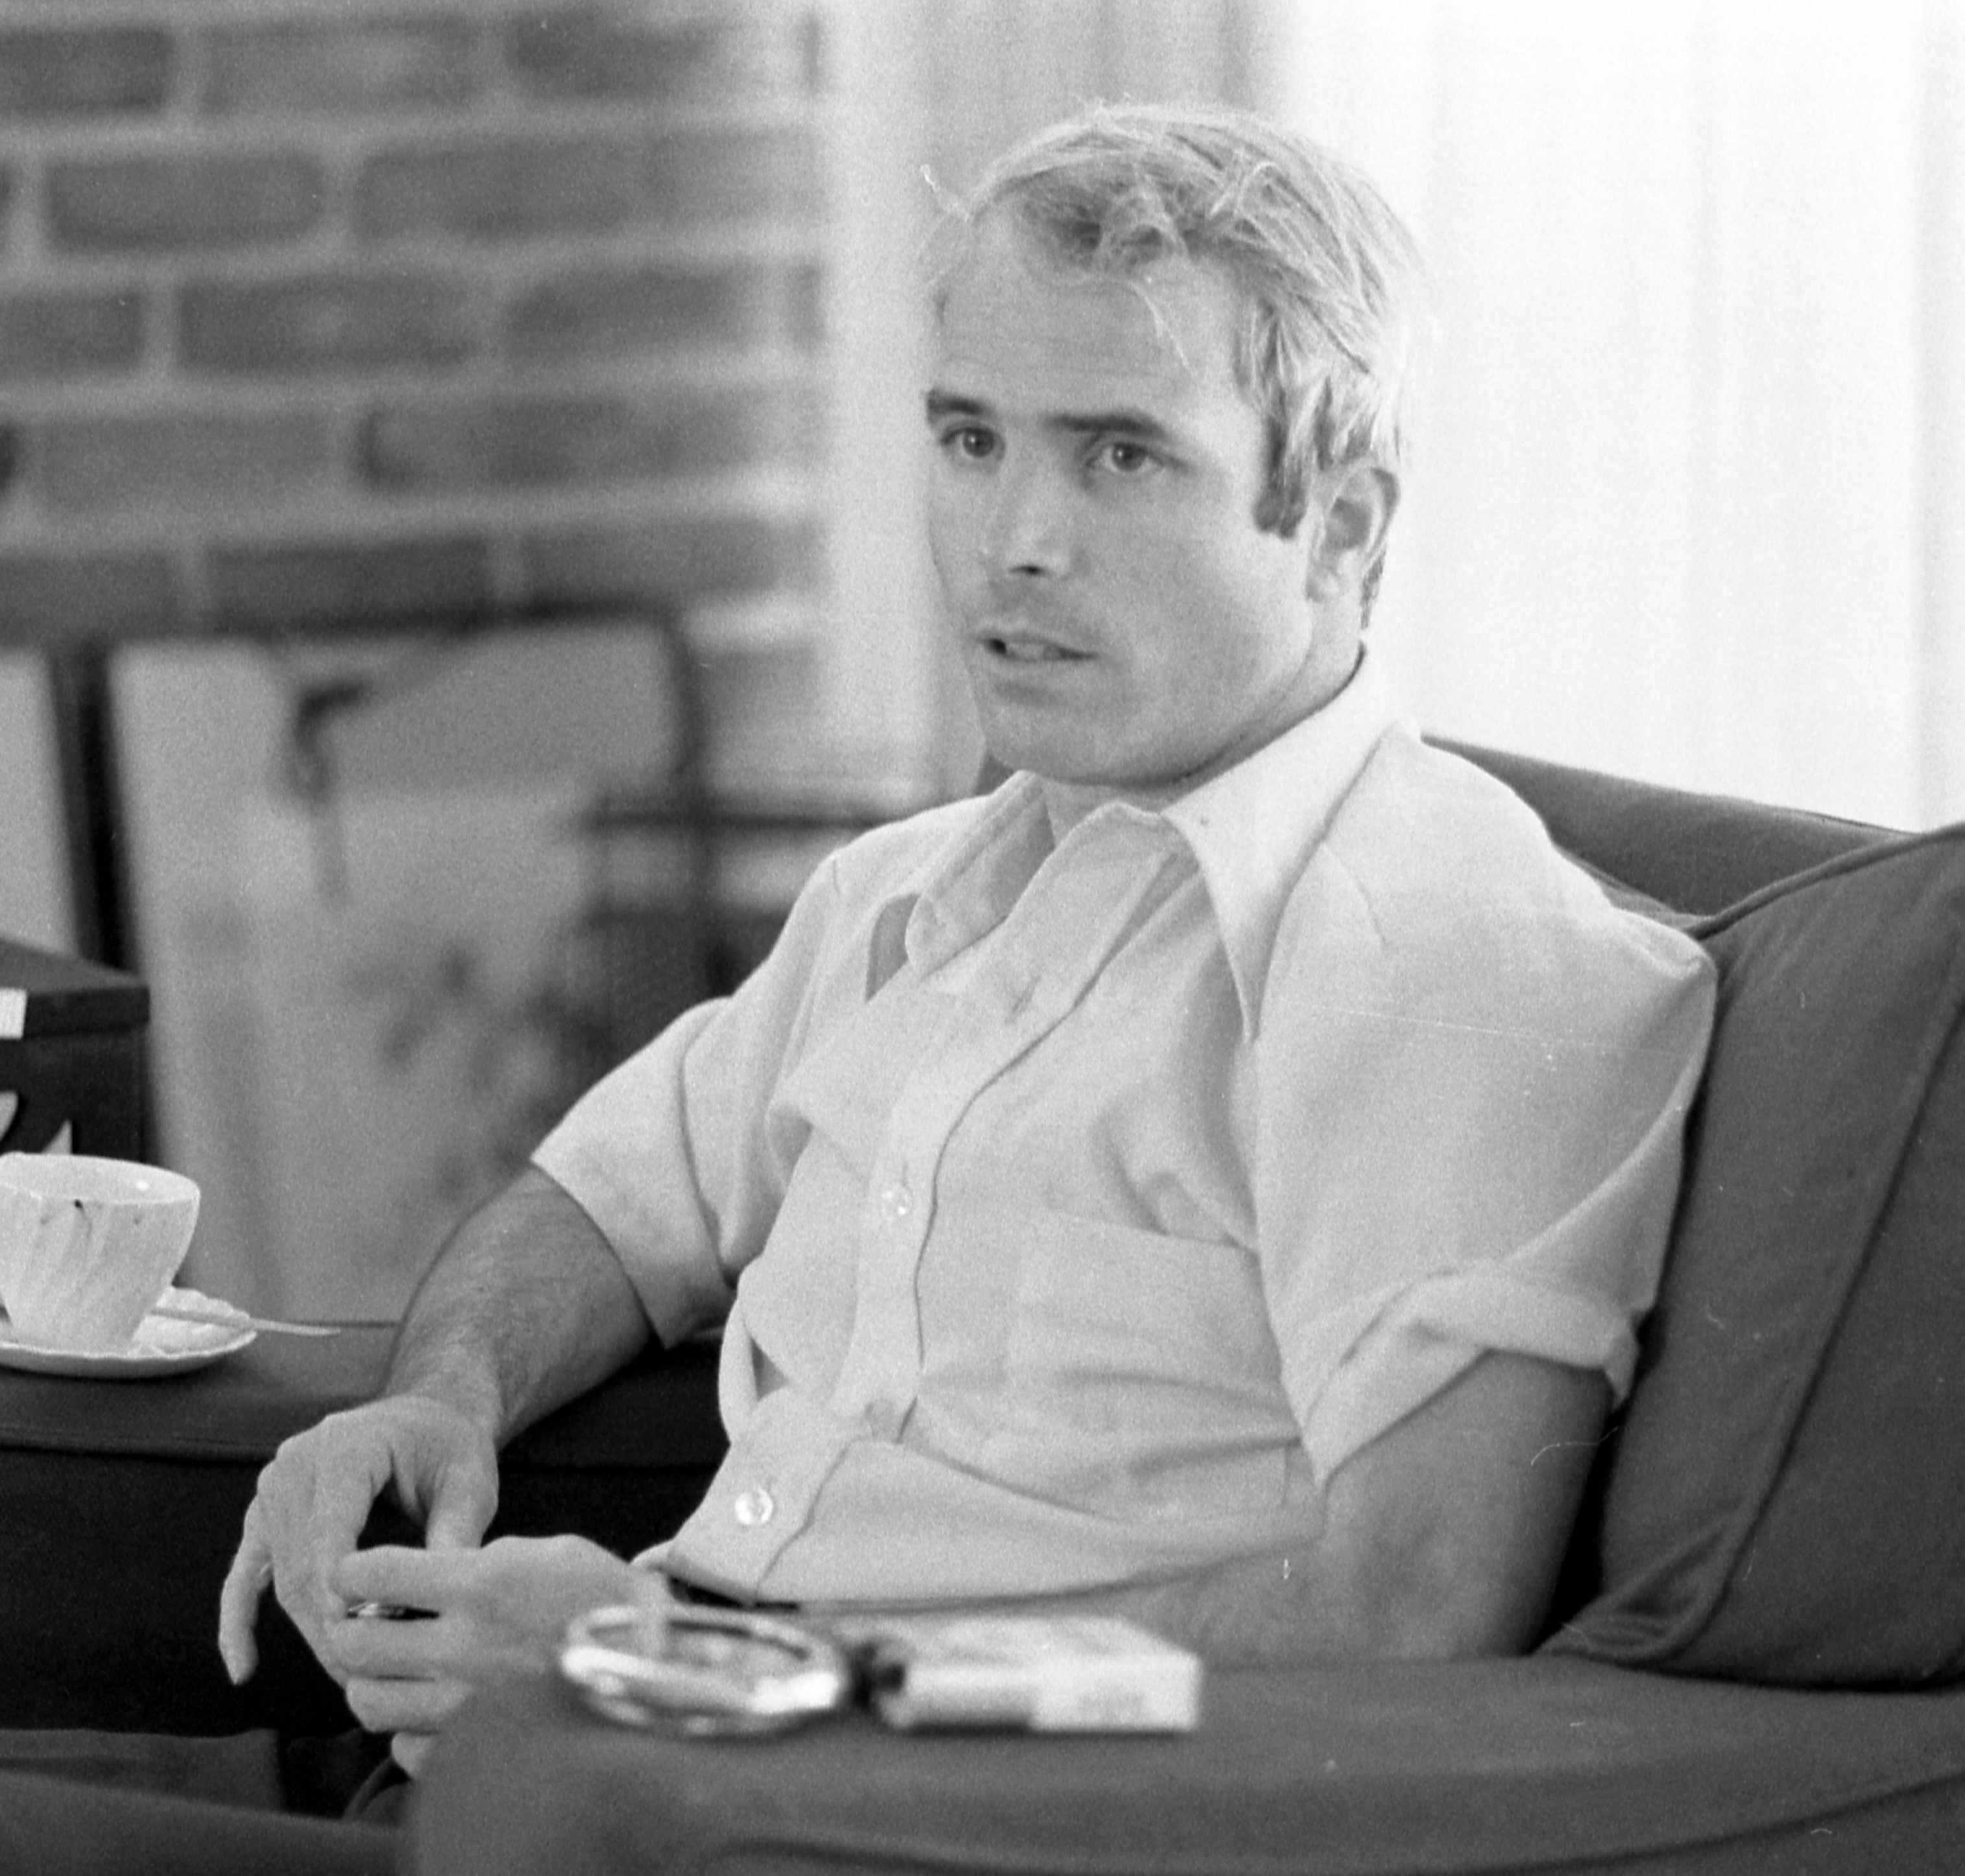 https://upload.wikimedia.org/wikipedia/commons/3/3b/John_McCain_interview_on_April_24%2C_1974.jpg